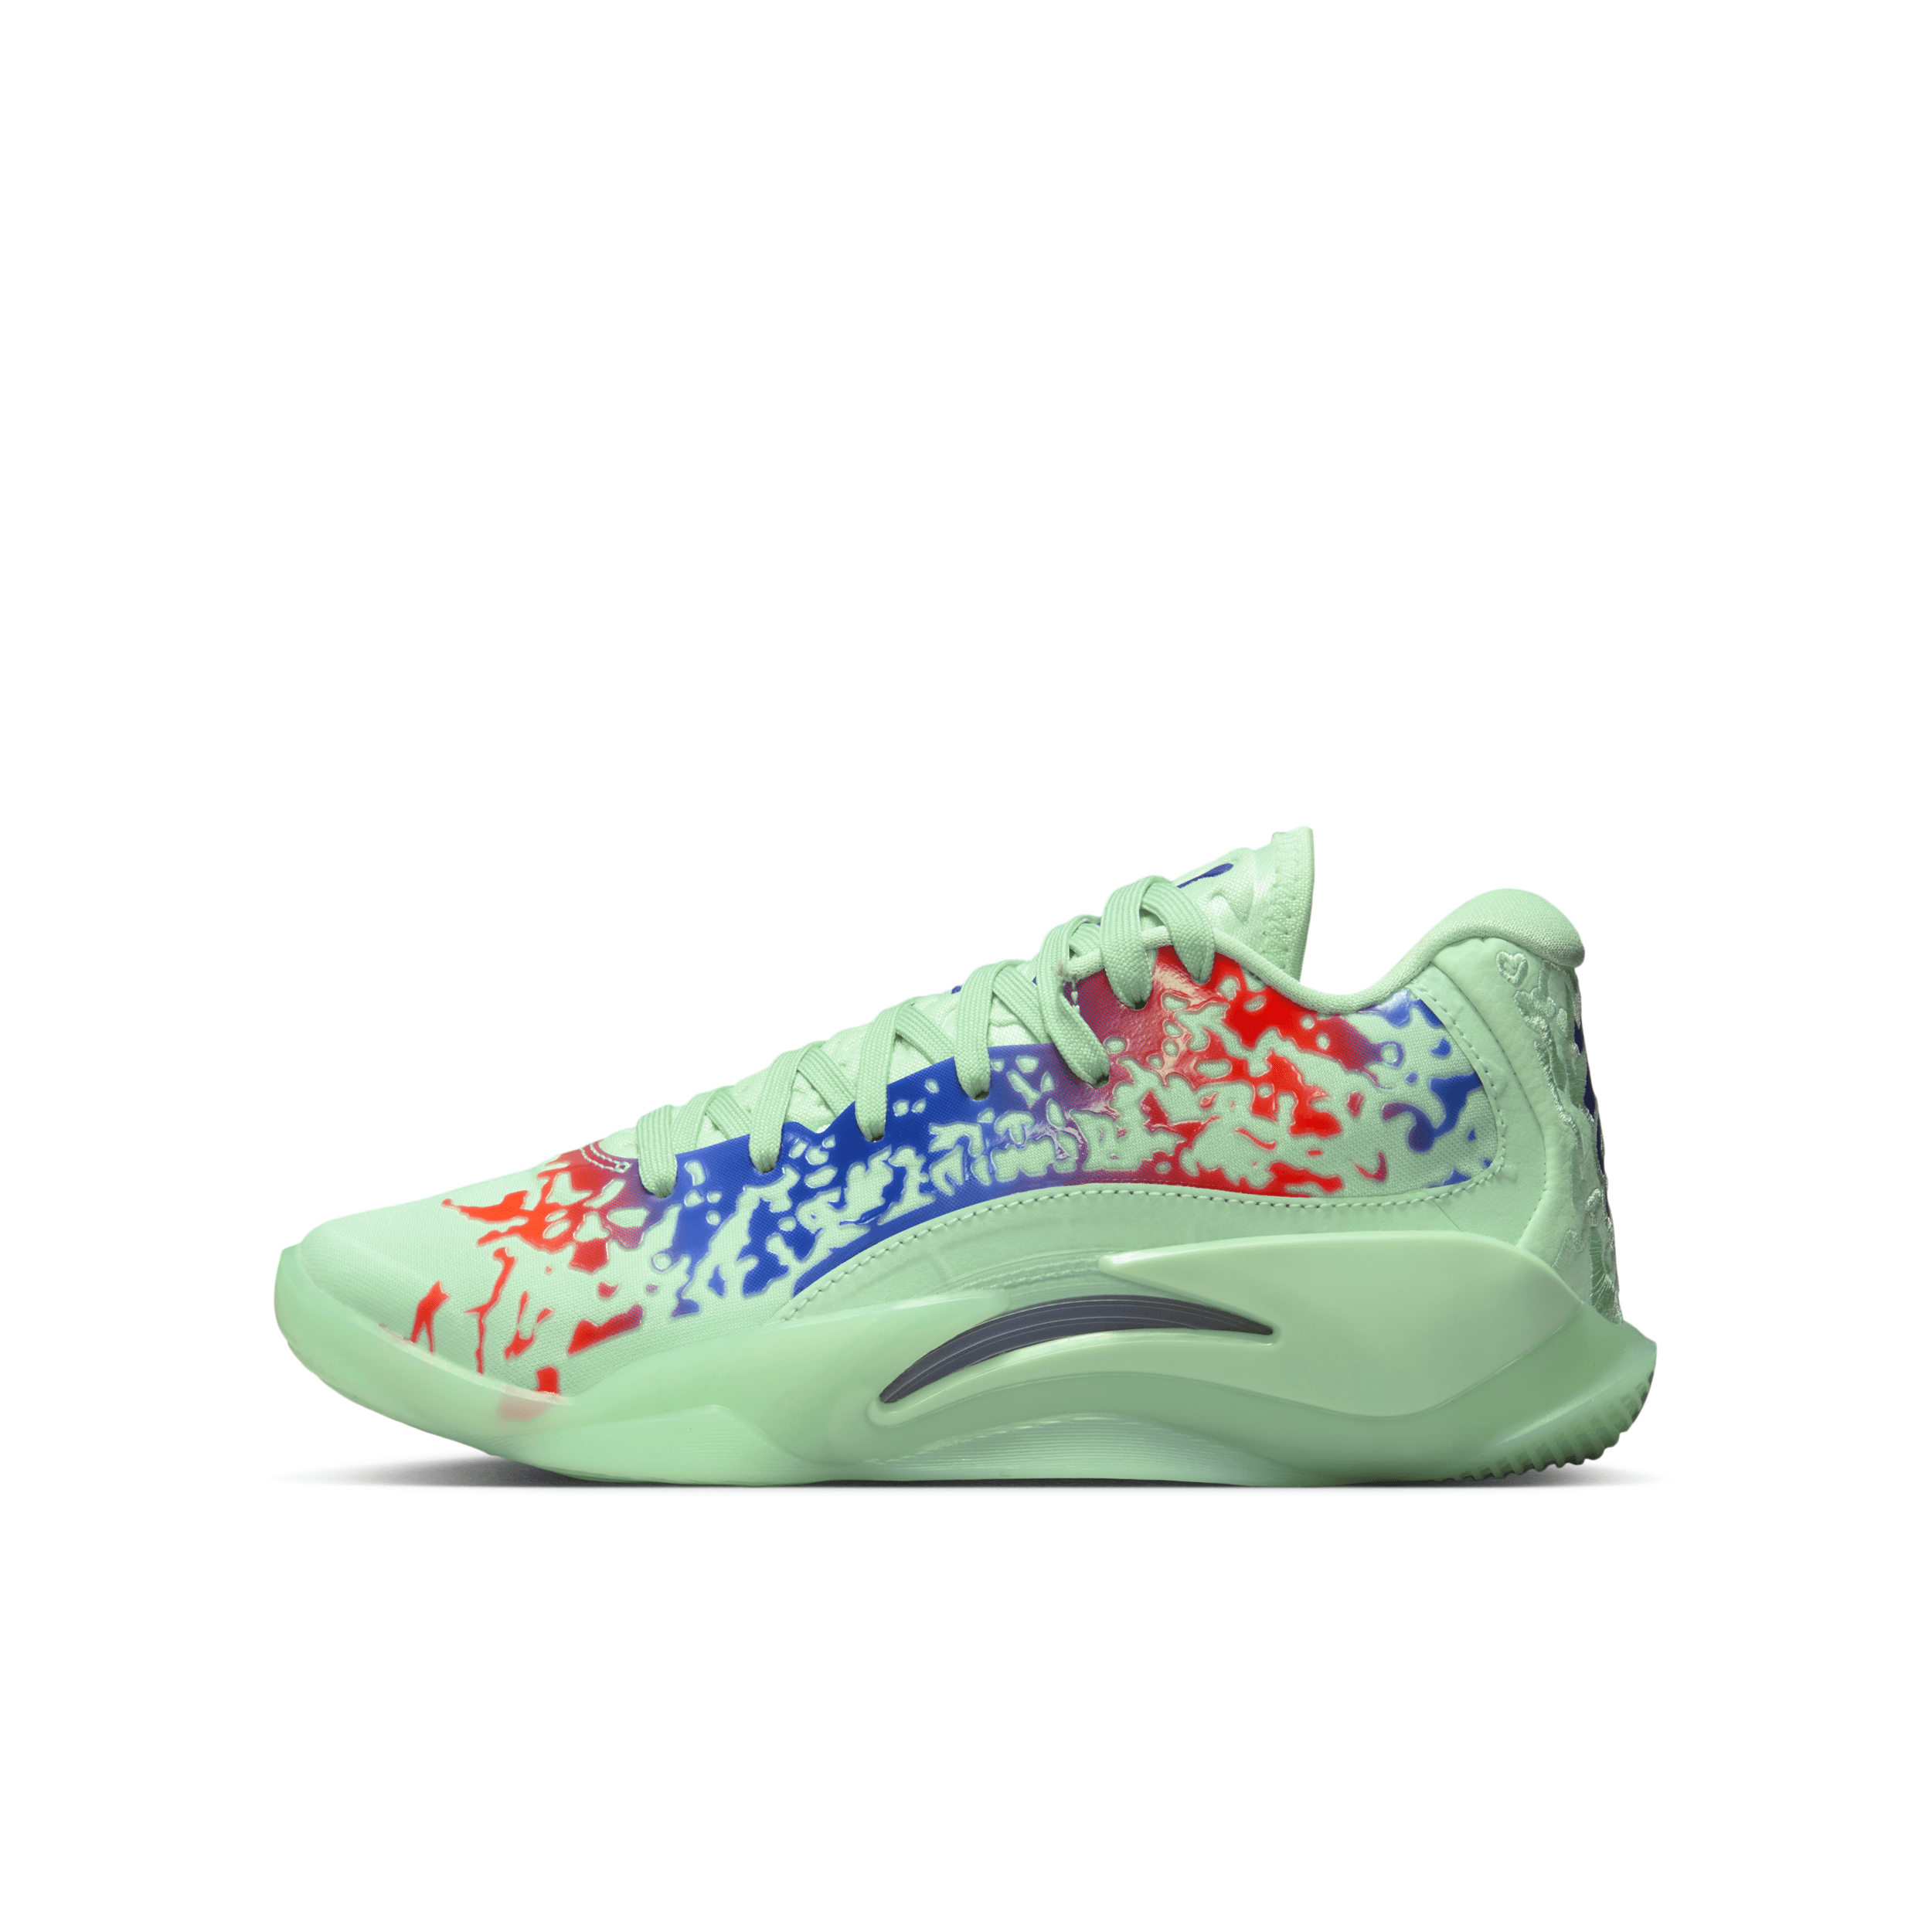 Jordan Nike Zion 3 "mud, Sweat, And Tears" Big Kids' Basketball Shoes In Green